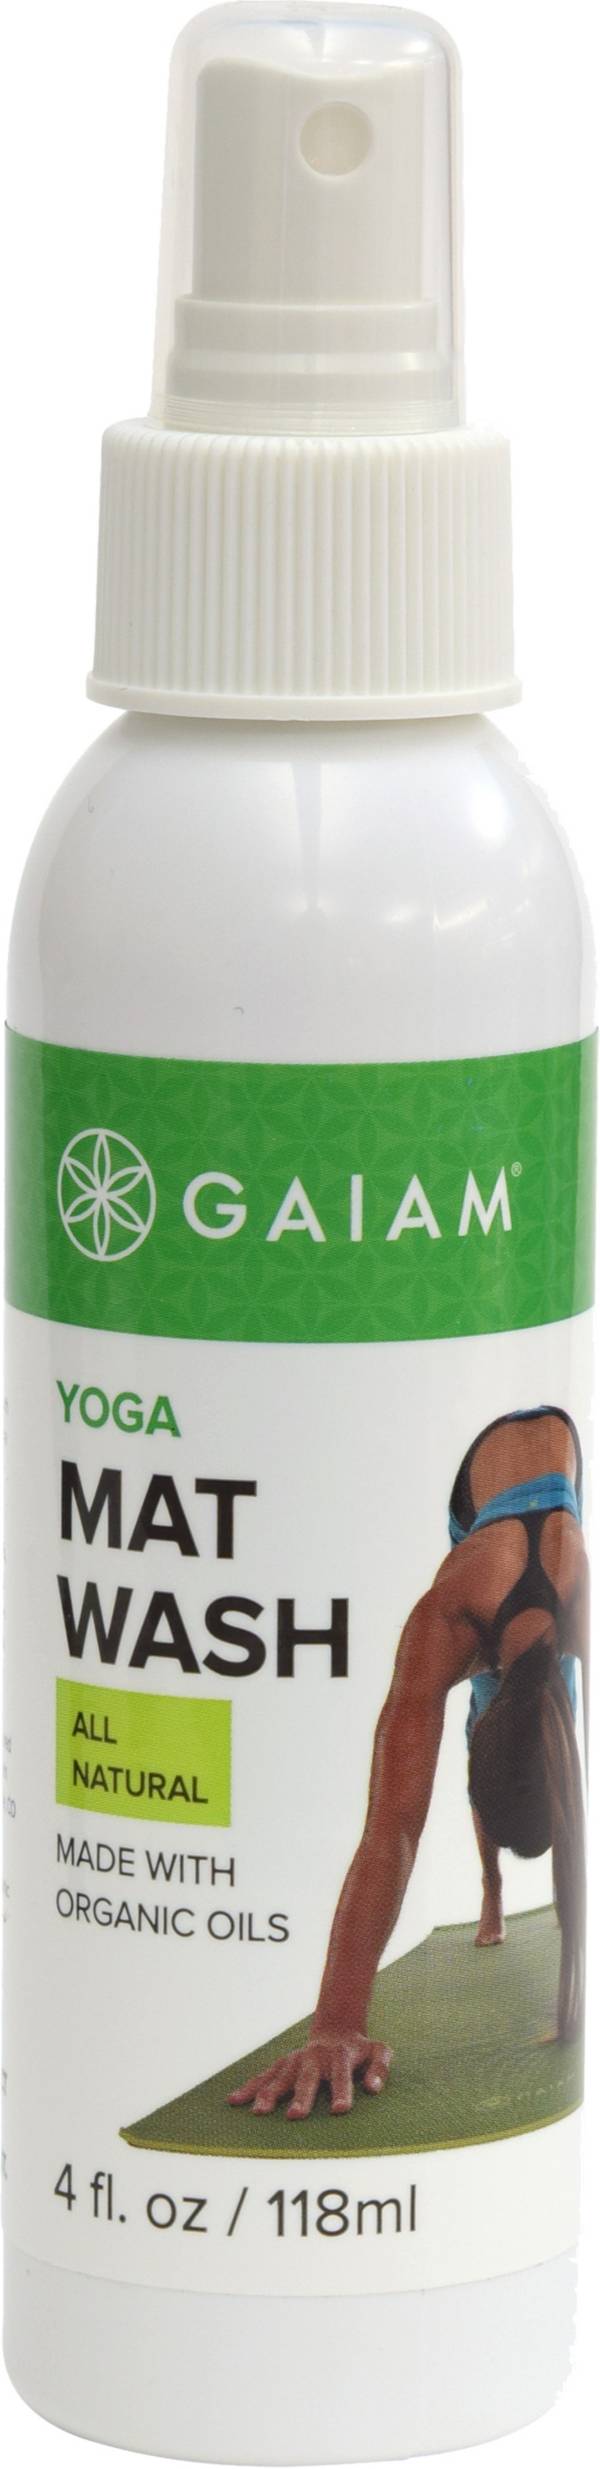 Gaiam Yoga Mat Spray product image